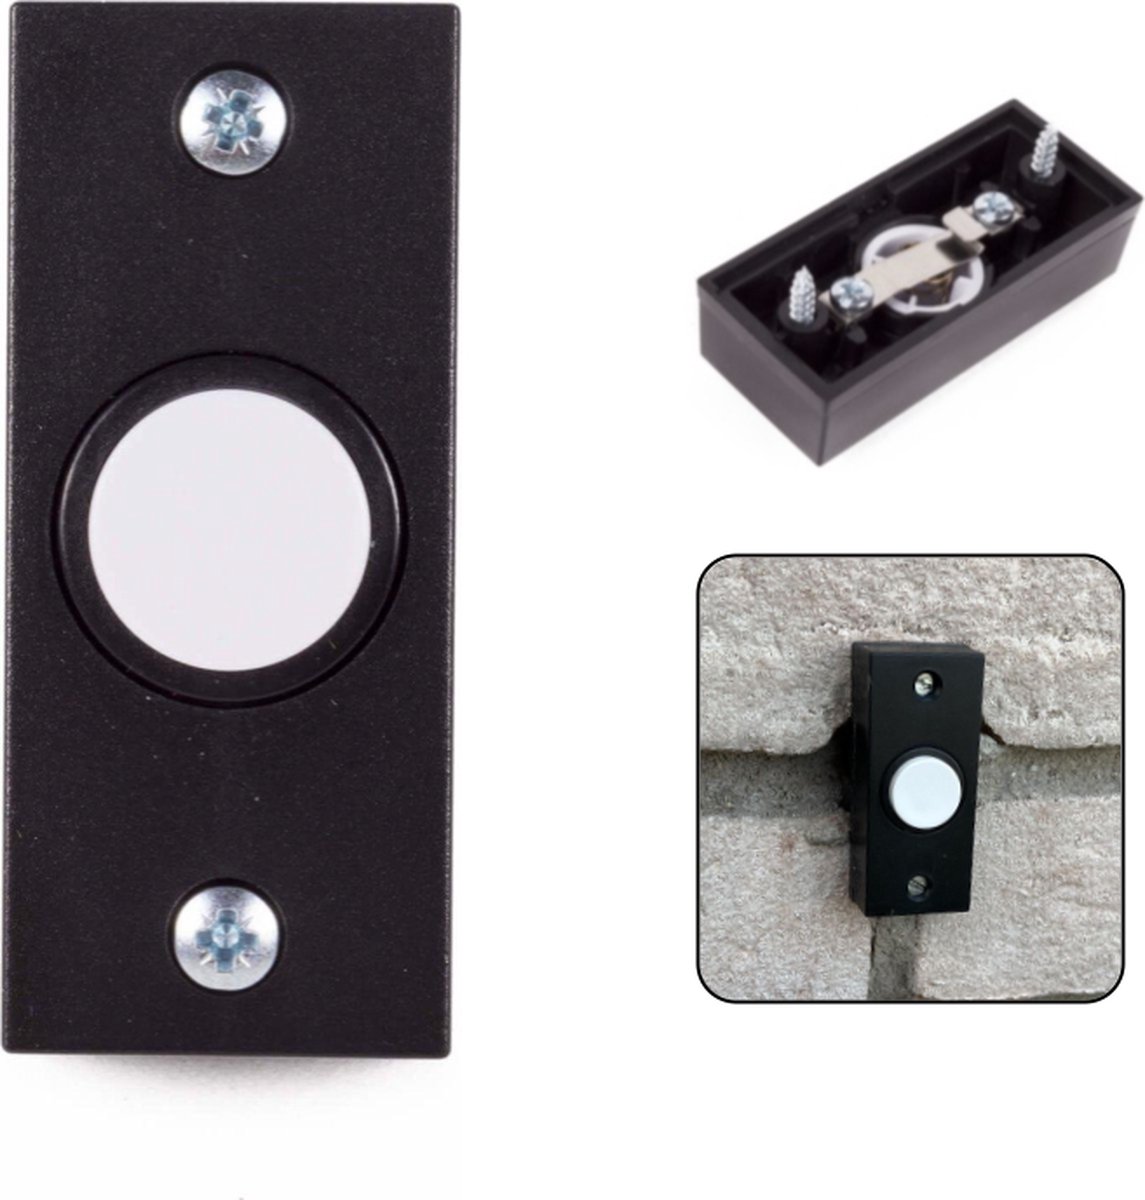 PD® - Deurbel Universeel - Zwarte deurbel met witte knop - Opbouw deurbel - 2 draads